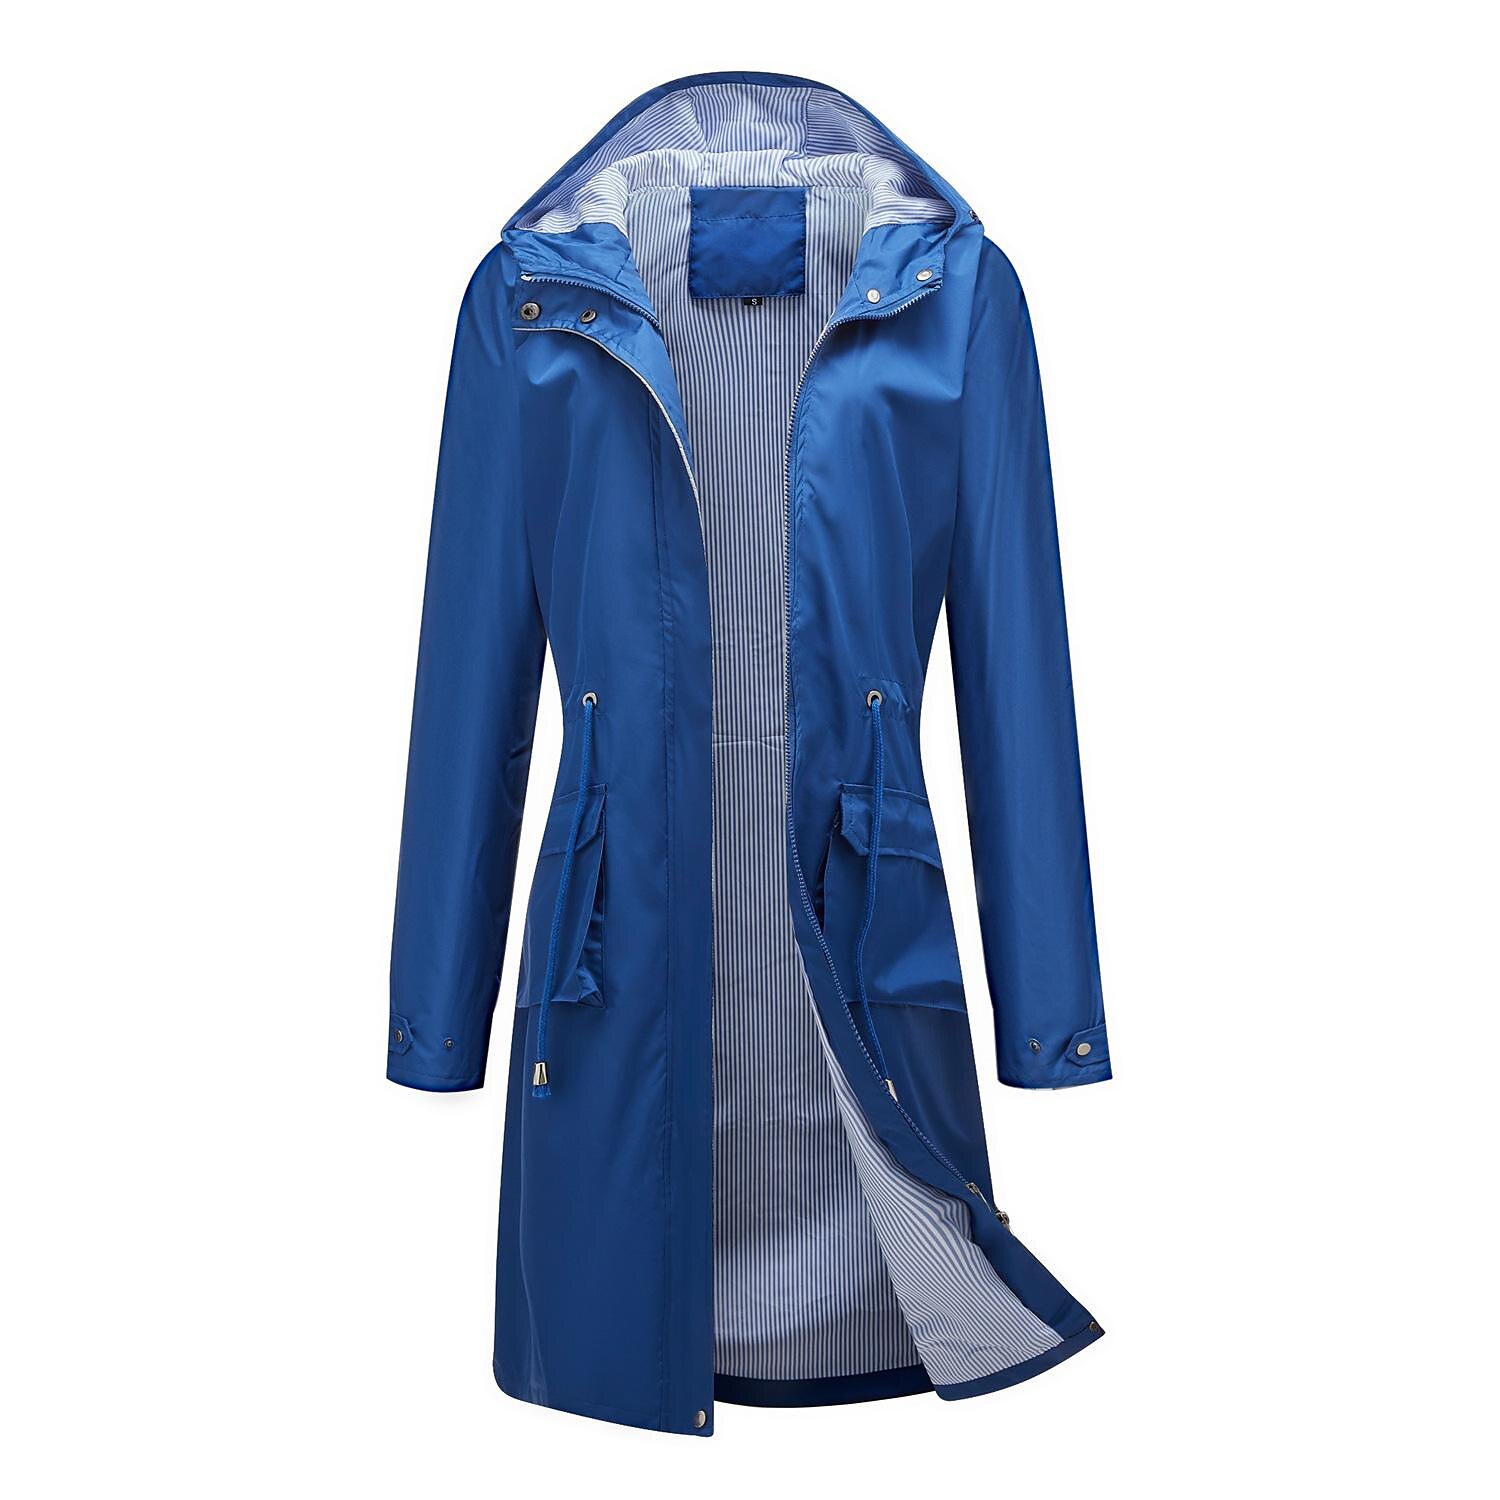 Women Hoodie Rain Jacket Waterproof Windproof Drawstring Zipper Raincoat Loose Winter Warm Parkas Outwear Solid Colour Active Quick Dry Outdoor Casual Plus Size Overcoat 